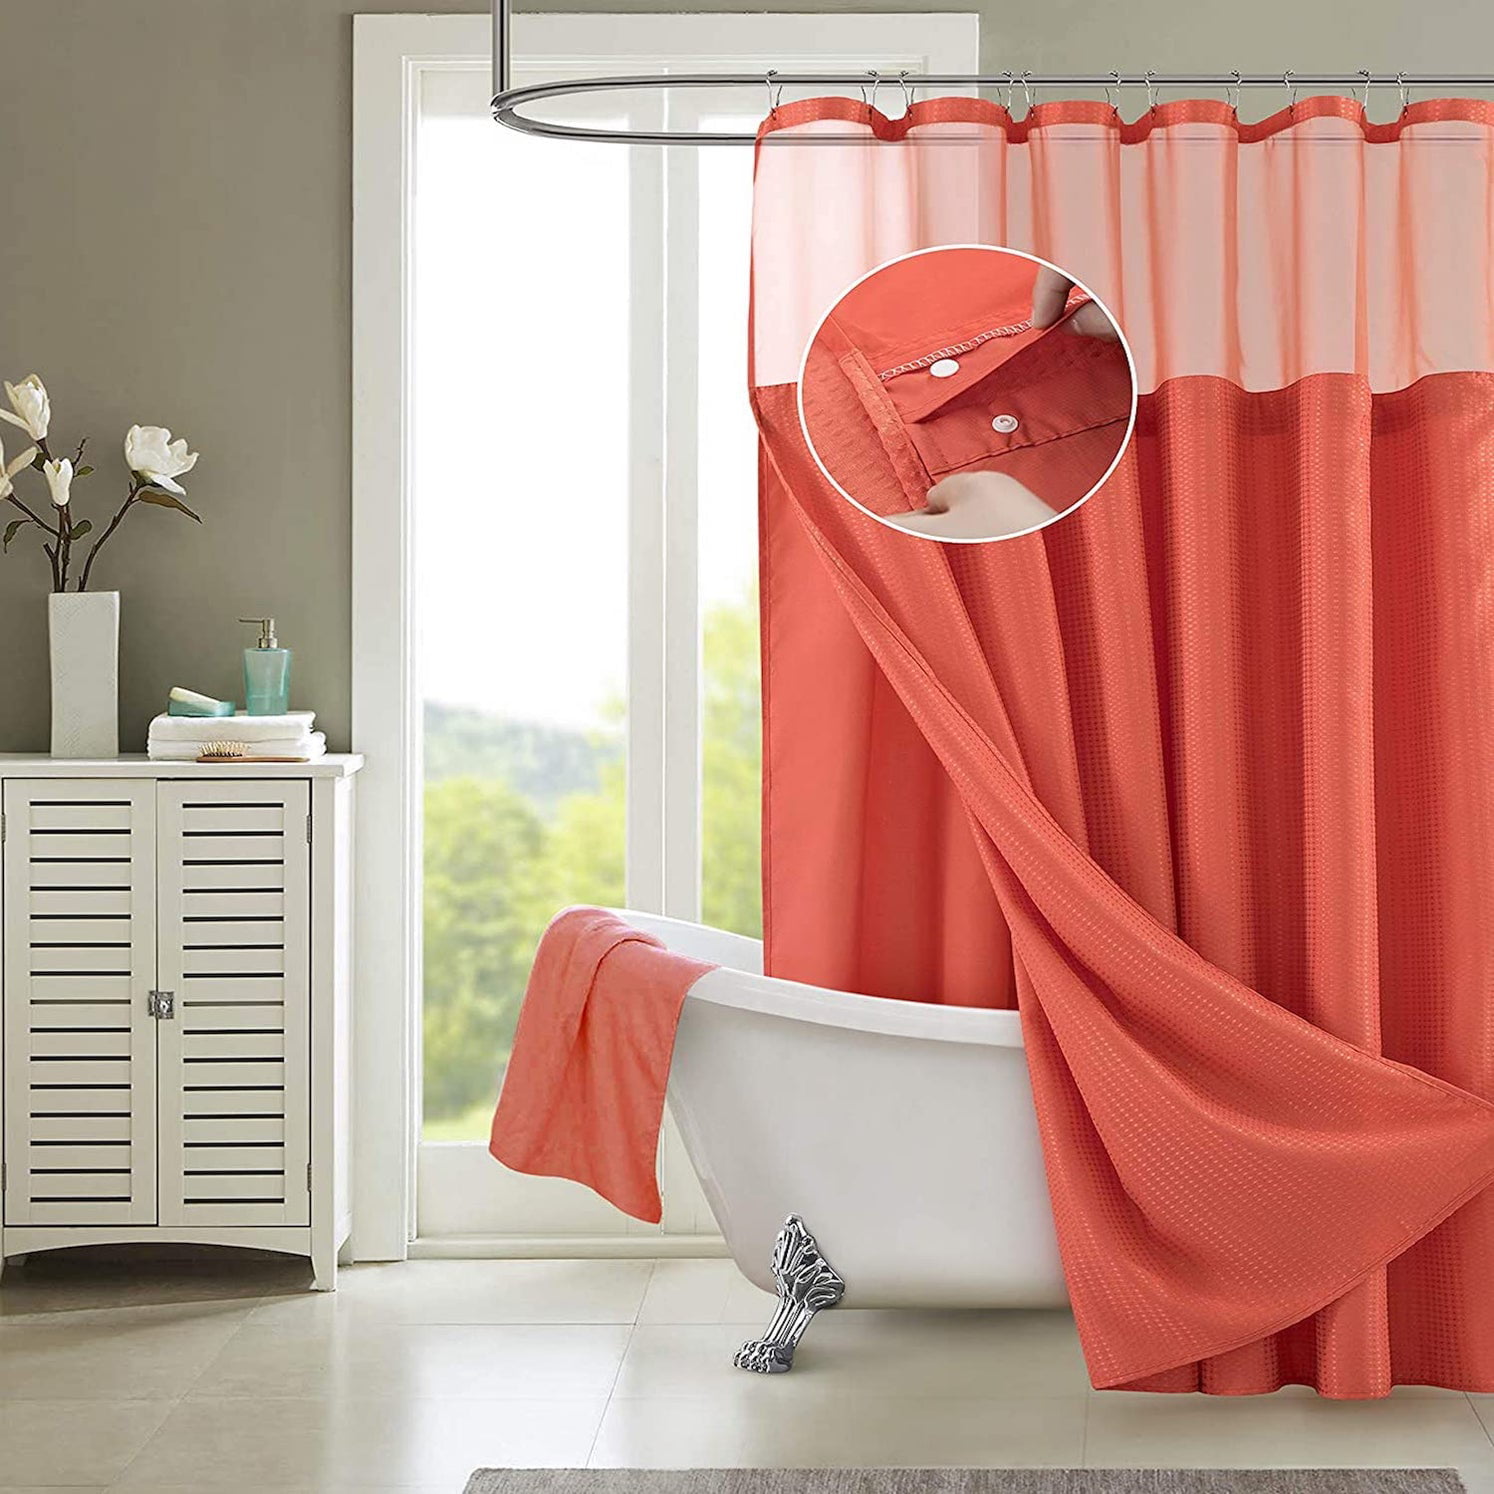 The Train Theme Waterproof Fabric Home Decor Shower Curtain Bathroom Mat 